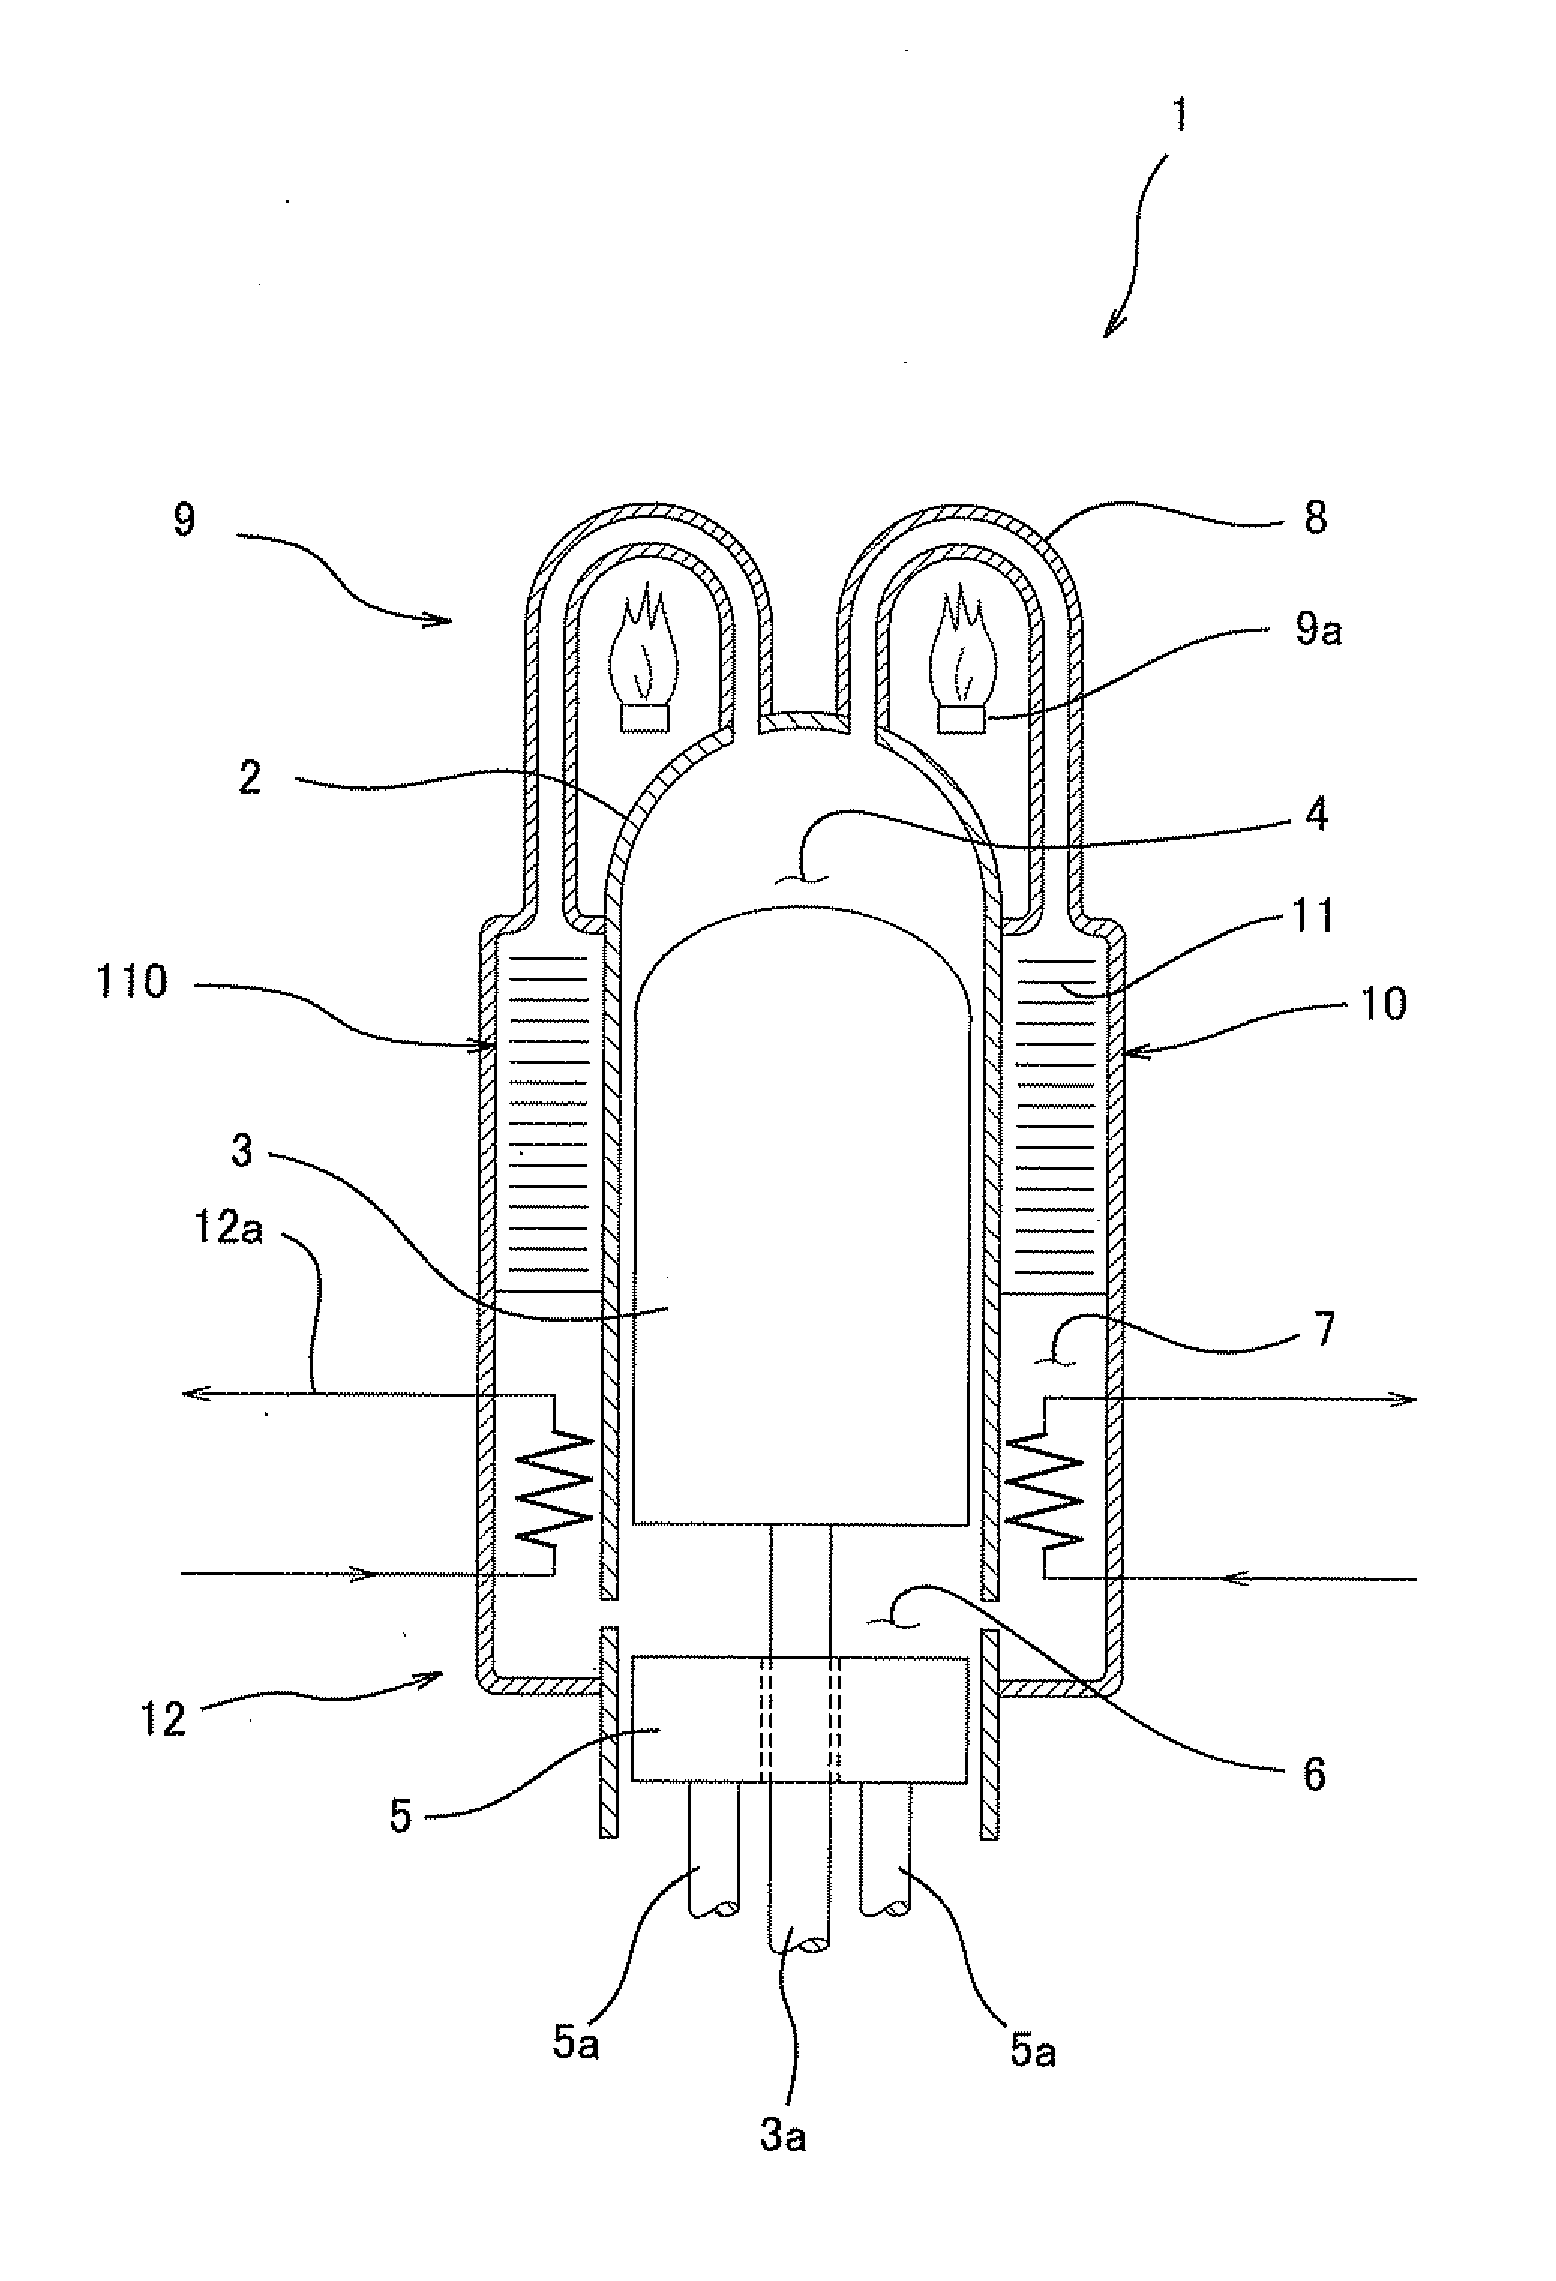 Heat engine regenerator and stirling engine using the regenerator